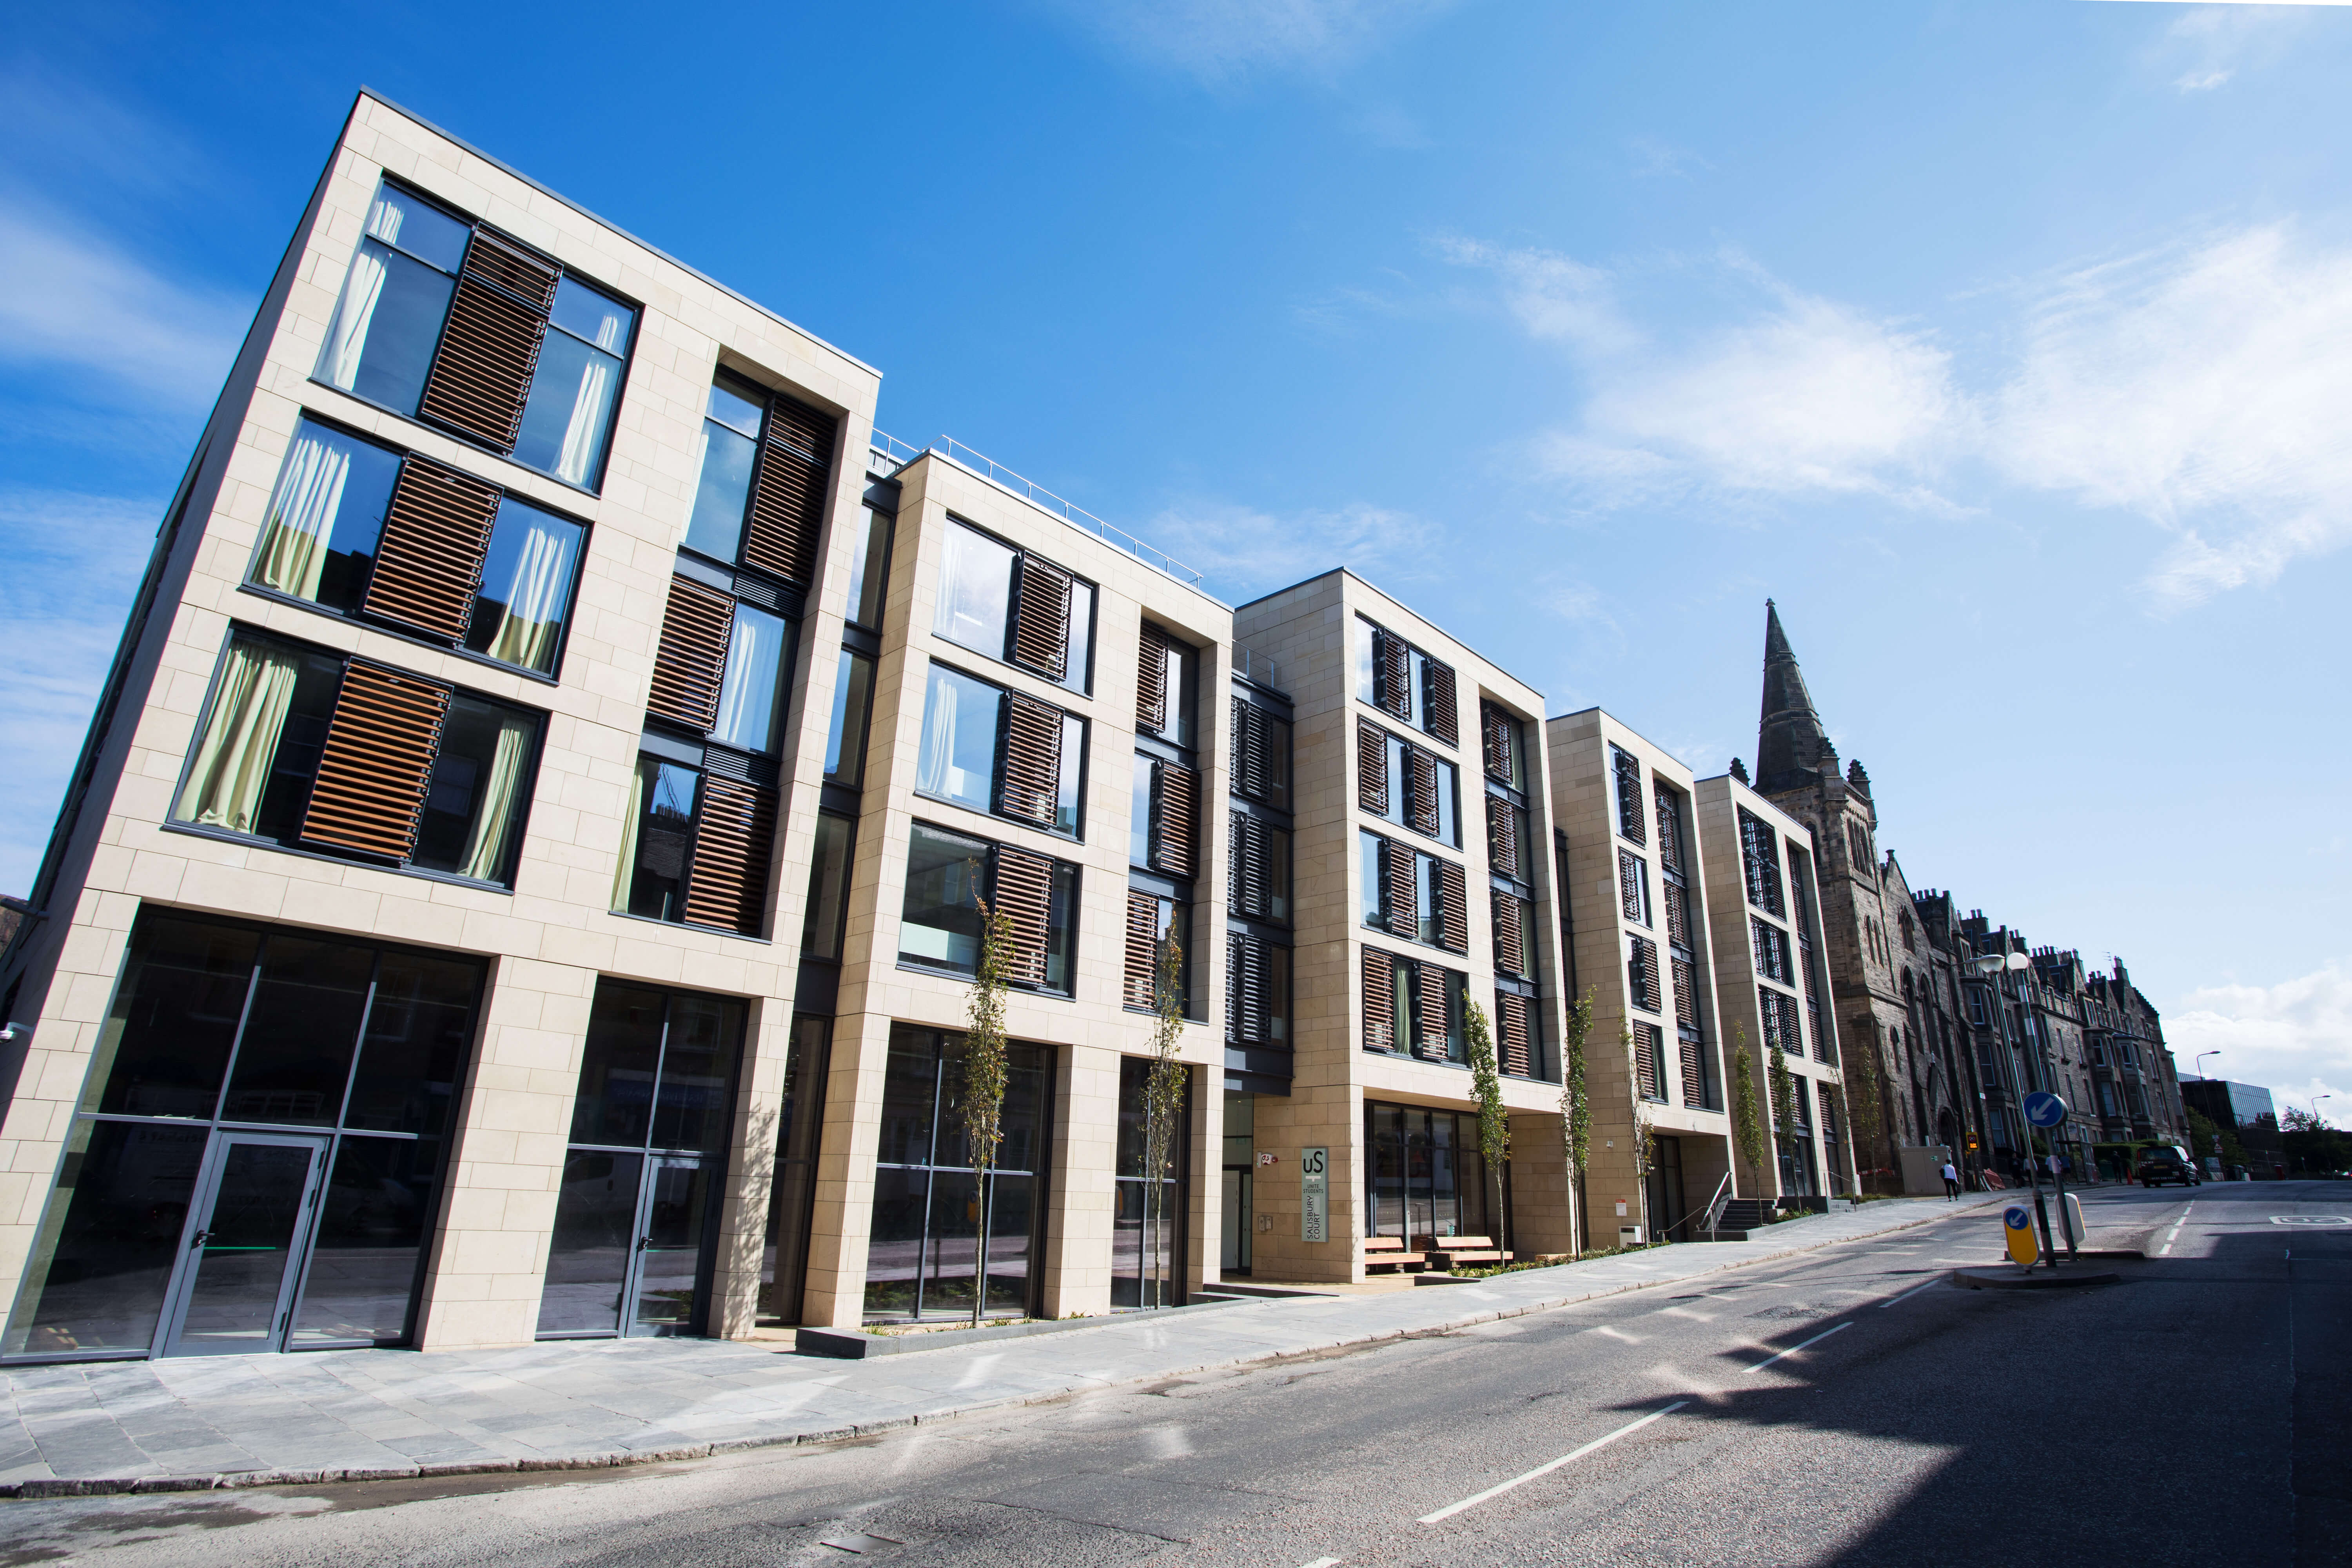 Unite Students accommodation at Salisbury Court in Edinburgh